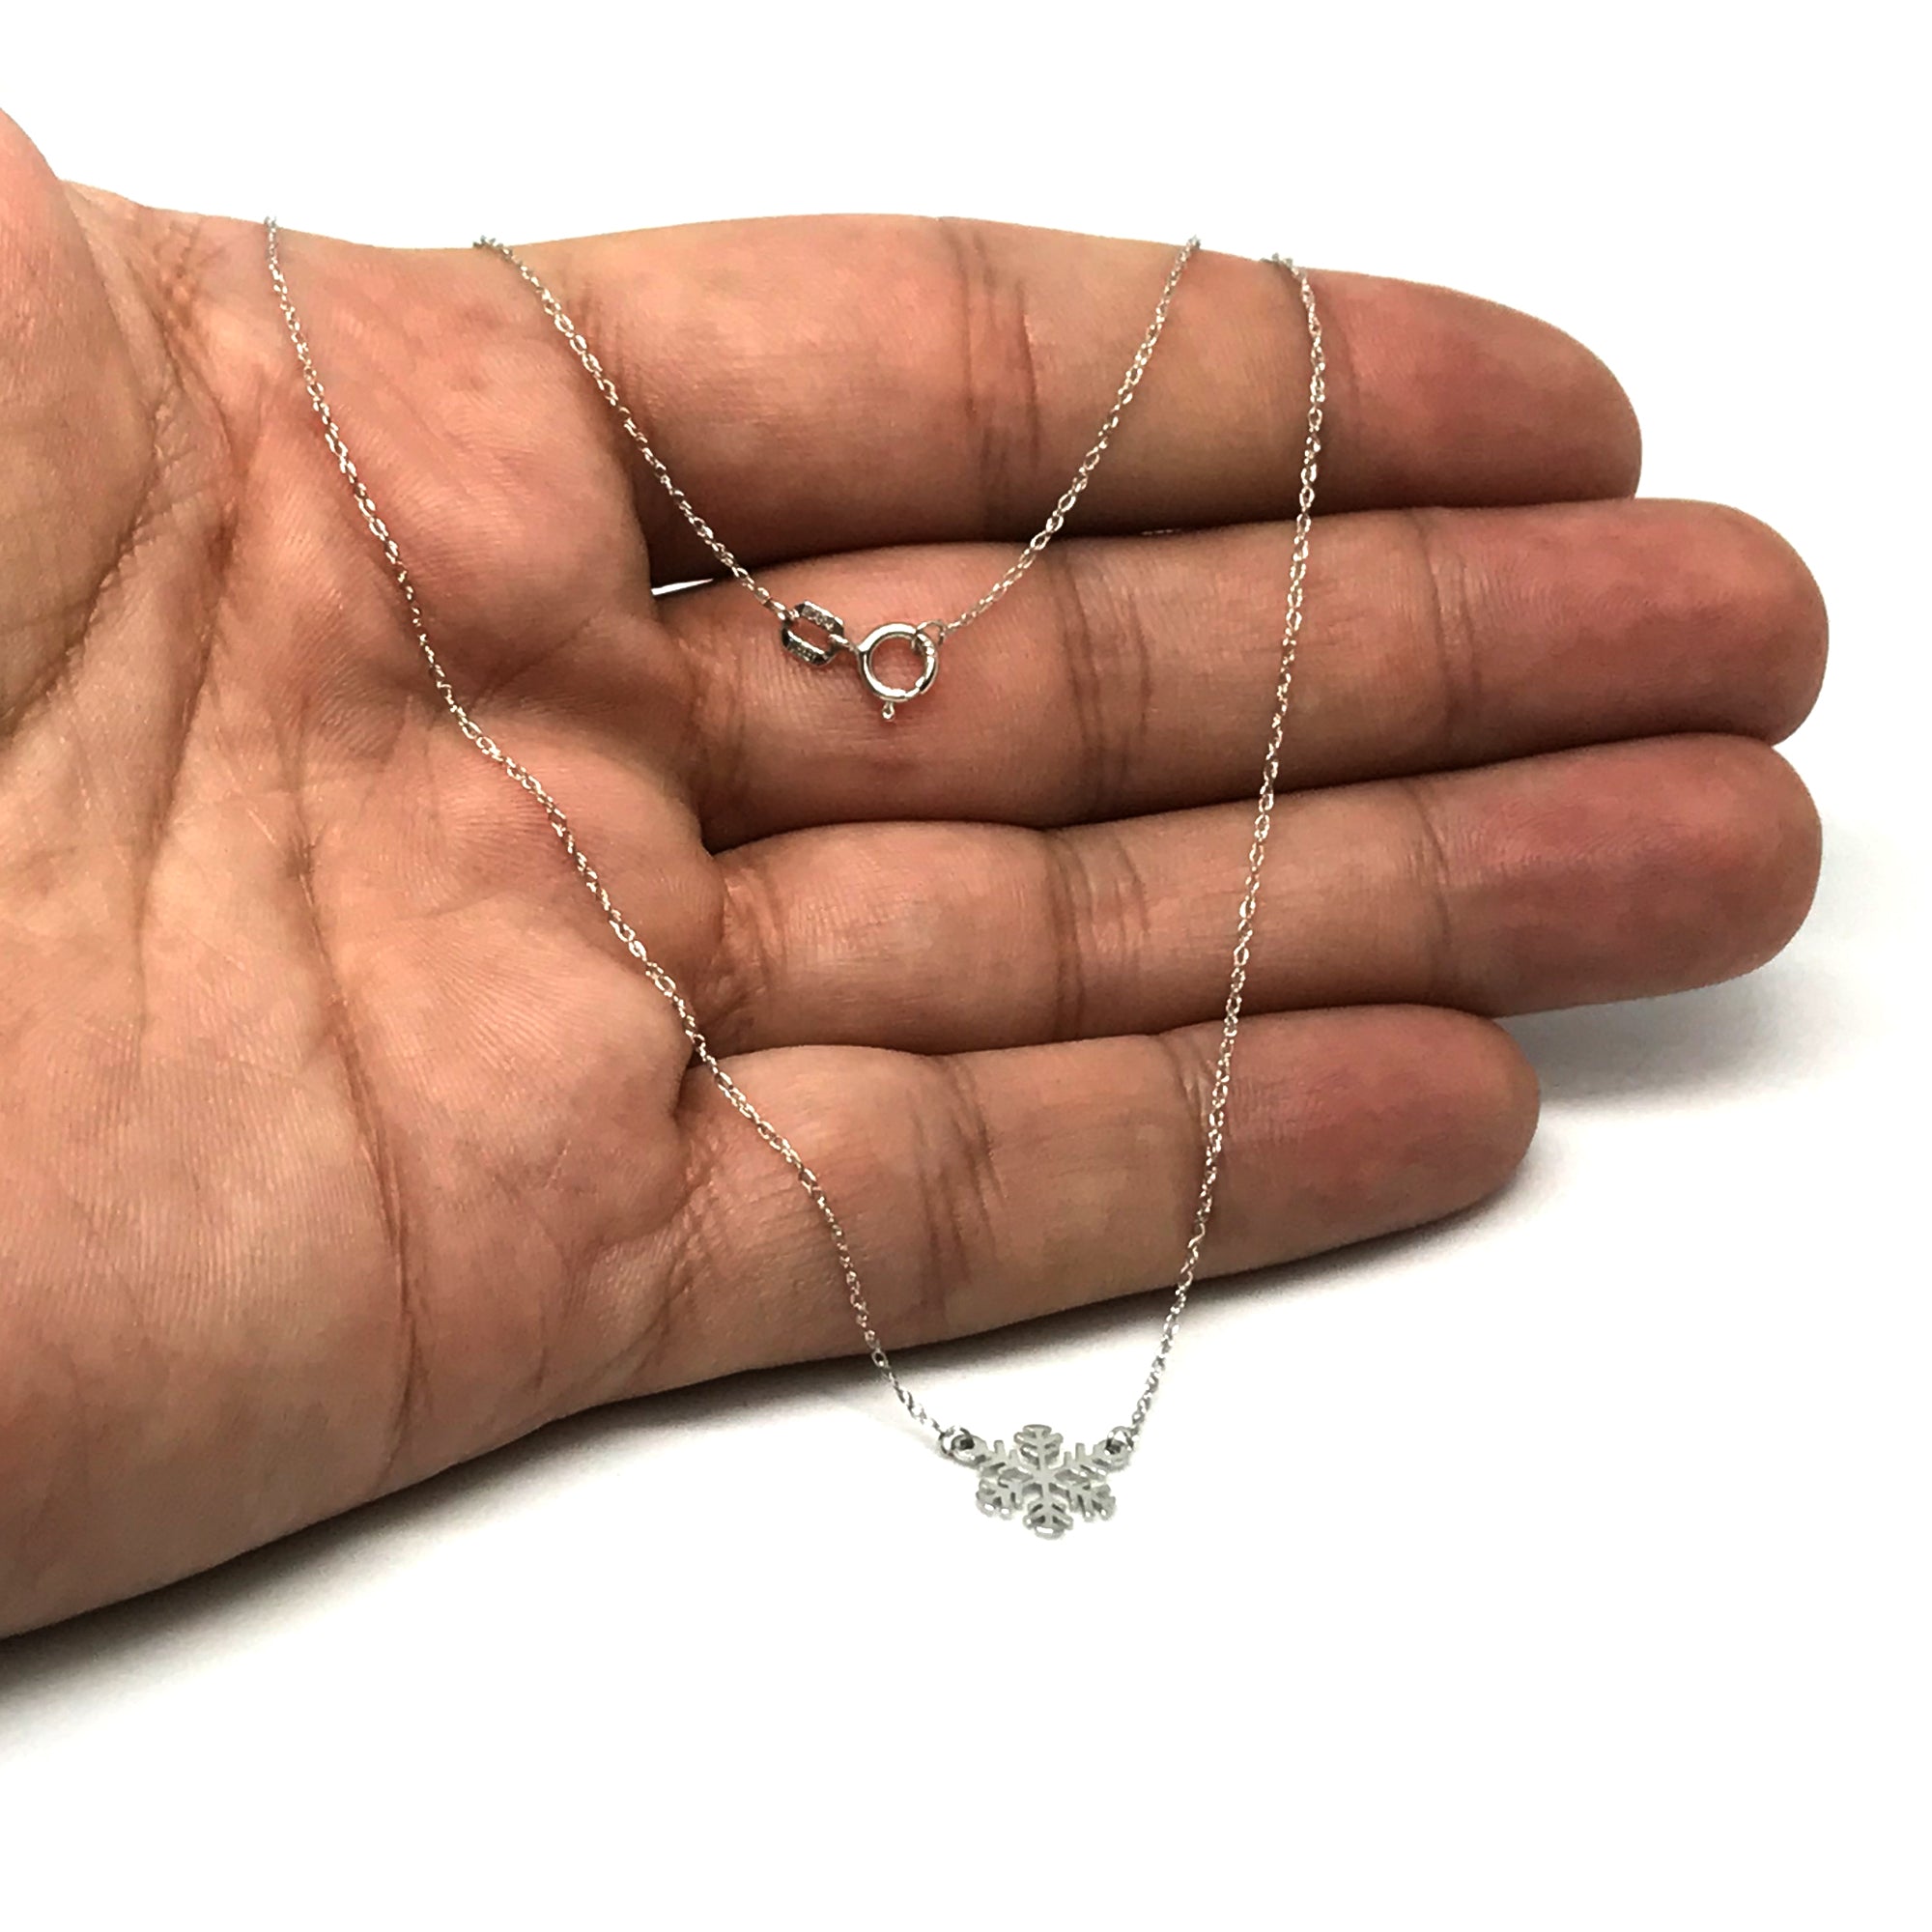 14K White Gold Mini Snowflake Pendant Necklace, 16" To 18" Adjustable fine designer jewelry for men and women